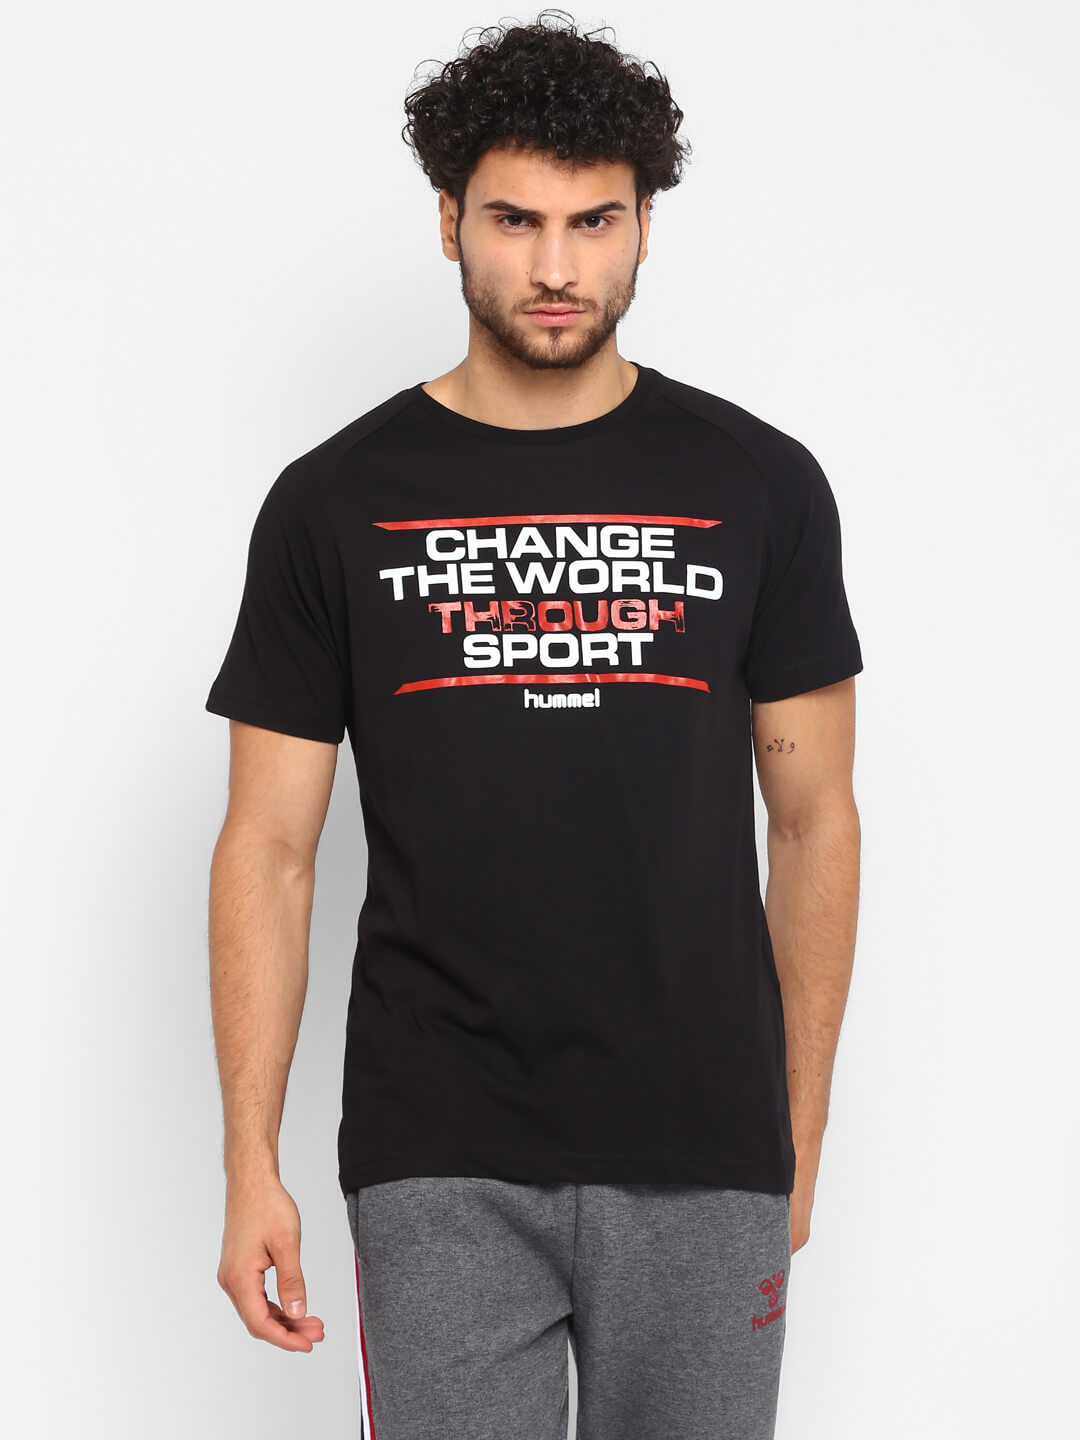 Lorenzo Black T-Shirts for Men